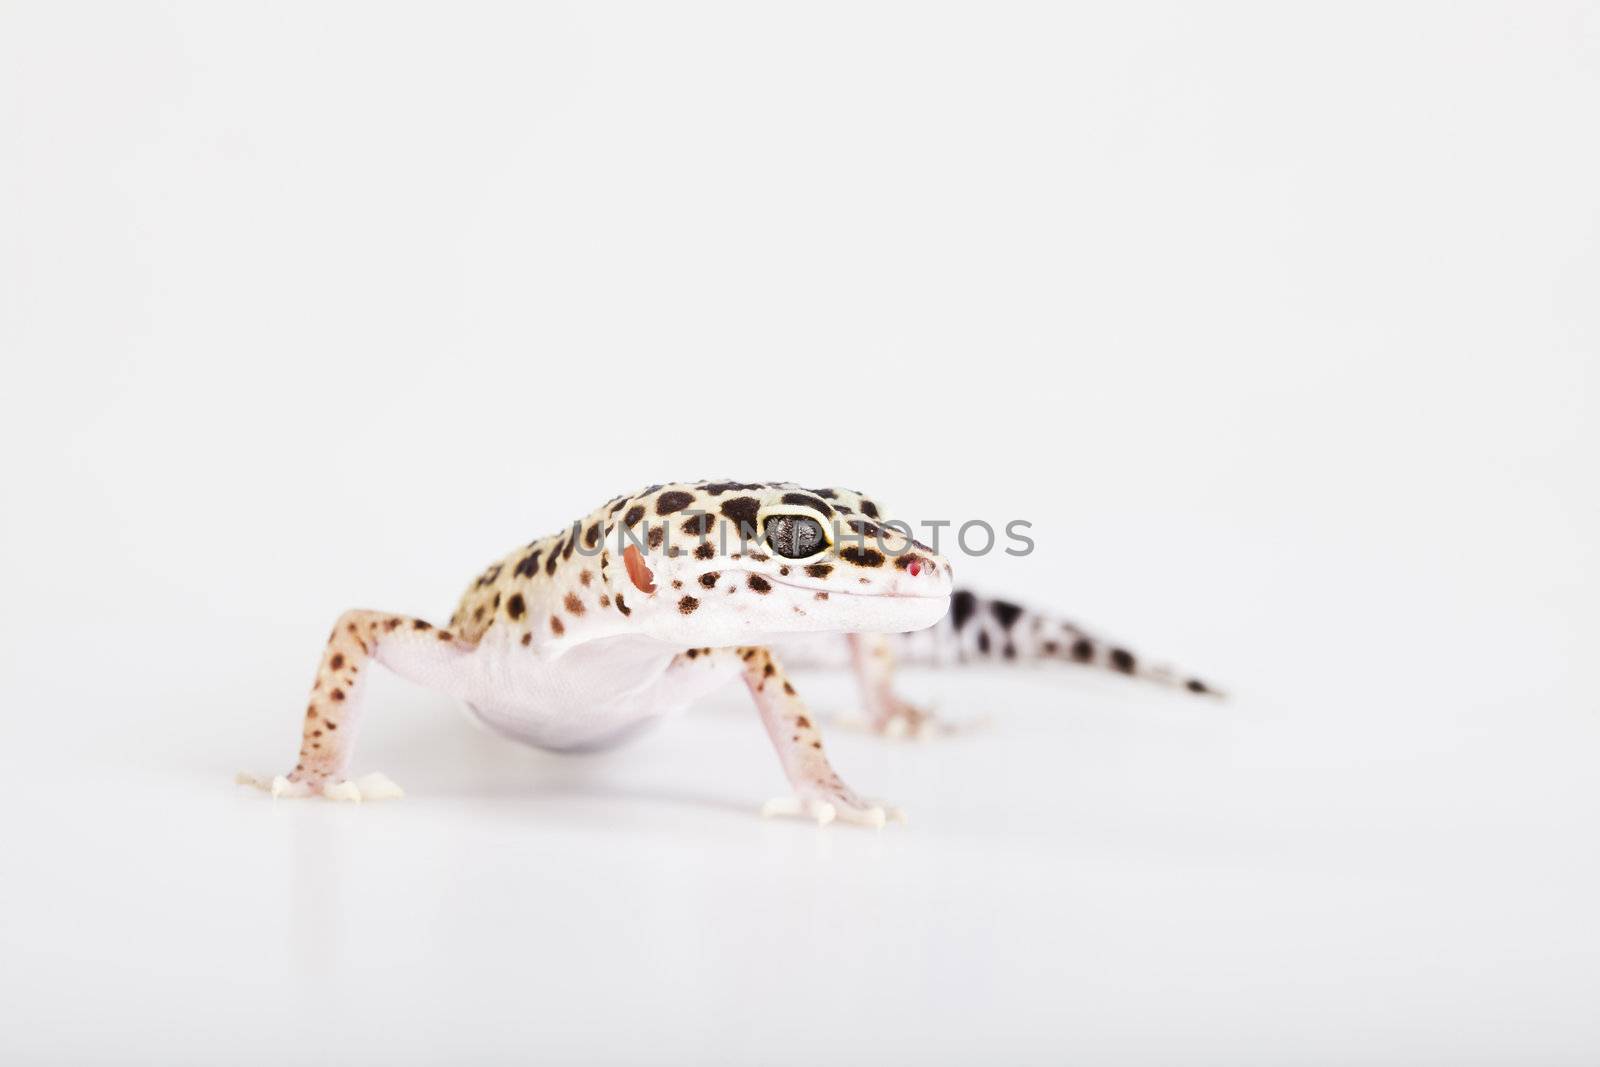 Small gecko reptile lizard by JanPietruszka